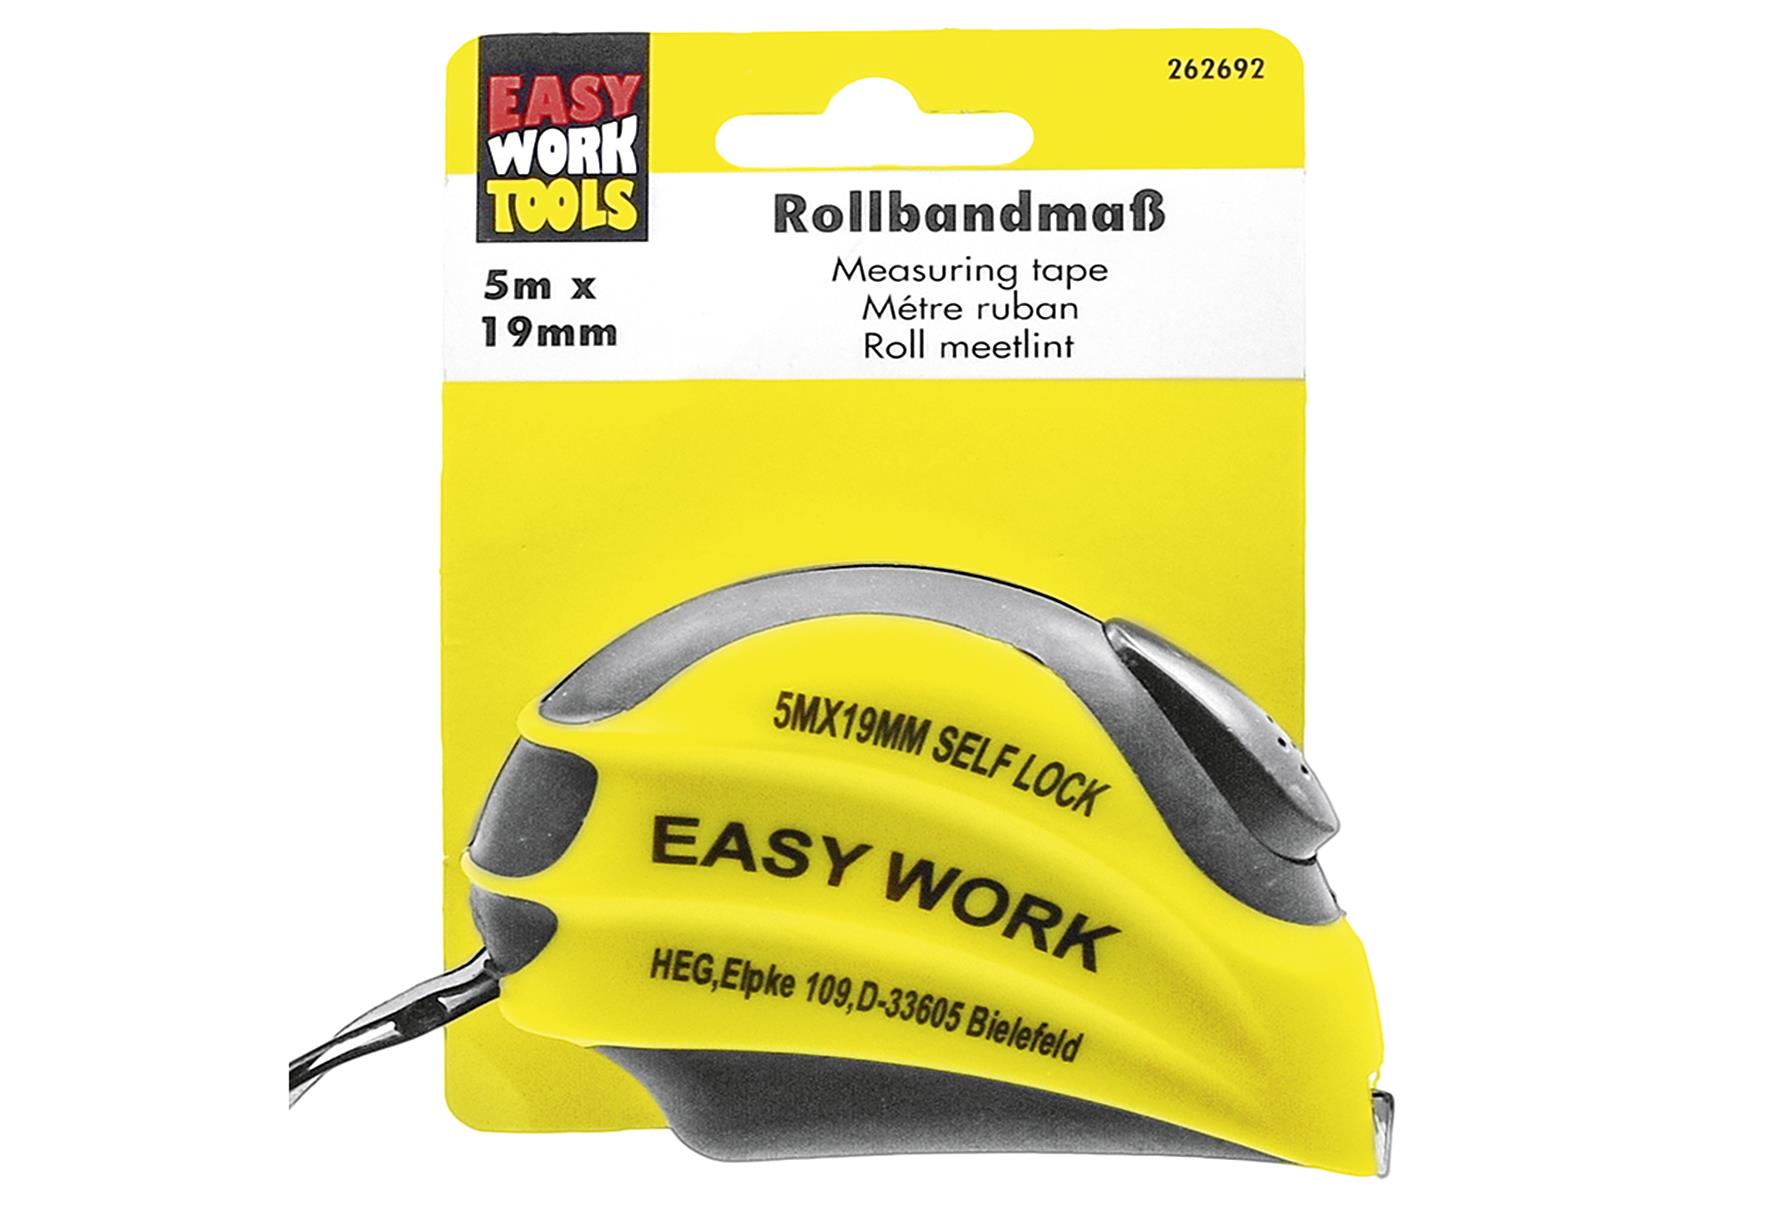 EASY WORK Rollbandmass